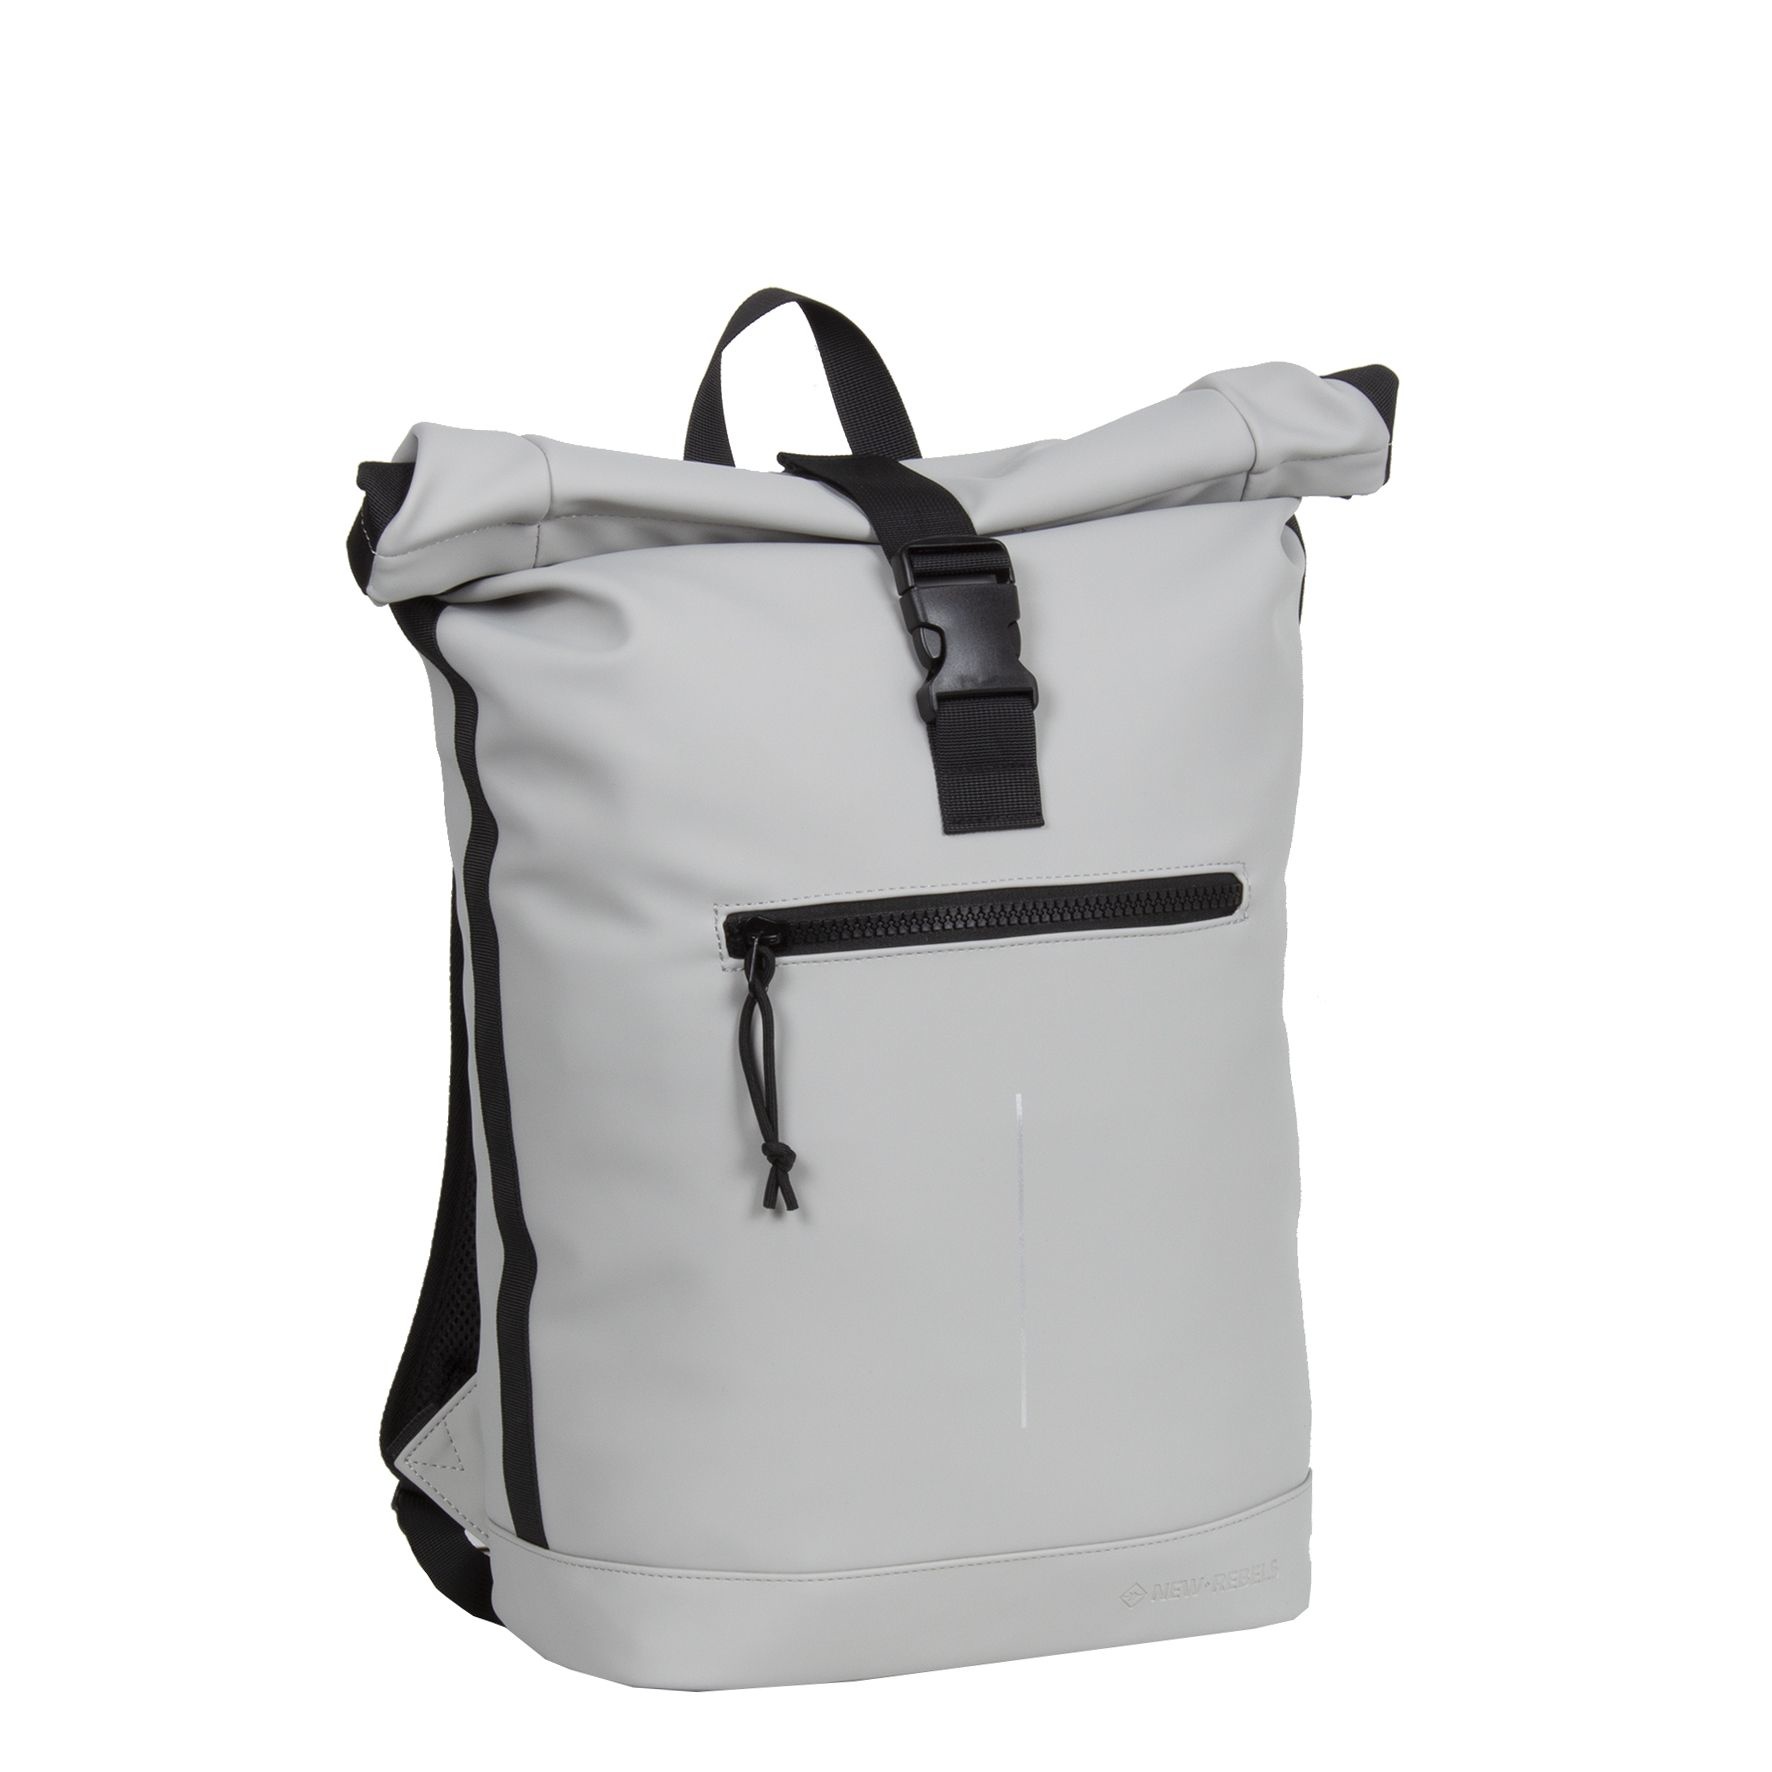 New Rebels® Mart - Rugtas - Grijs - Waterbestendig - Roll-top - 15.6 - 35x10x46cm - Rugzak / Backpack